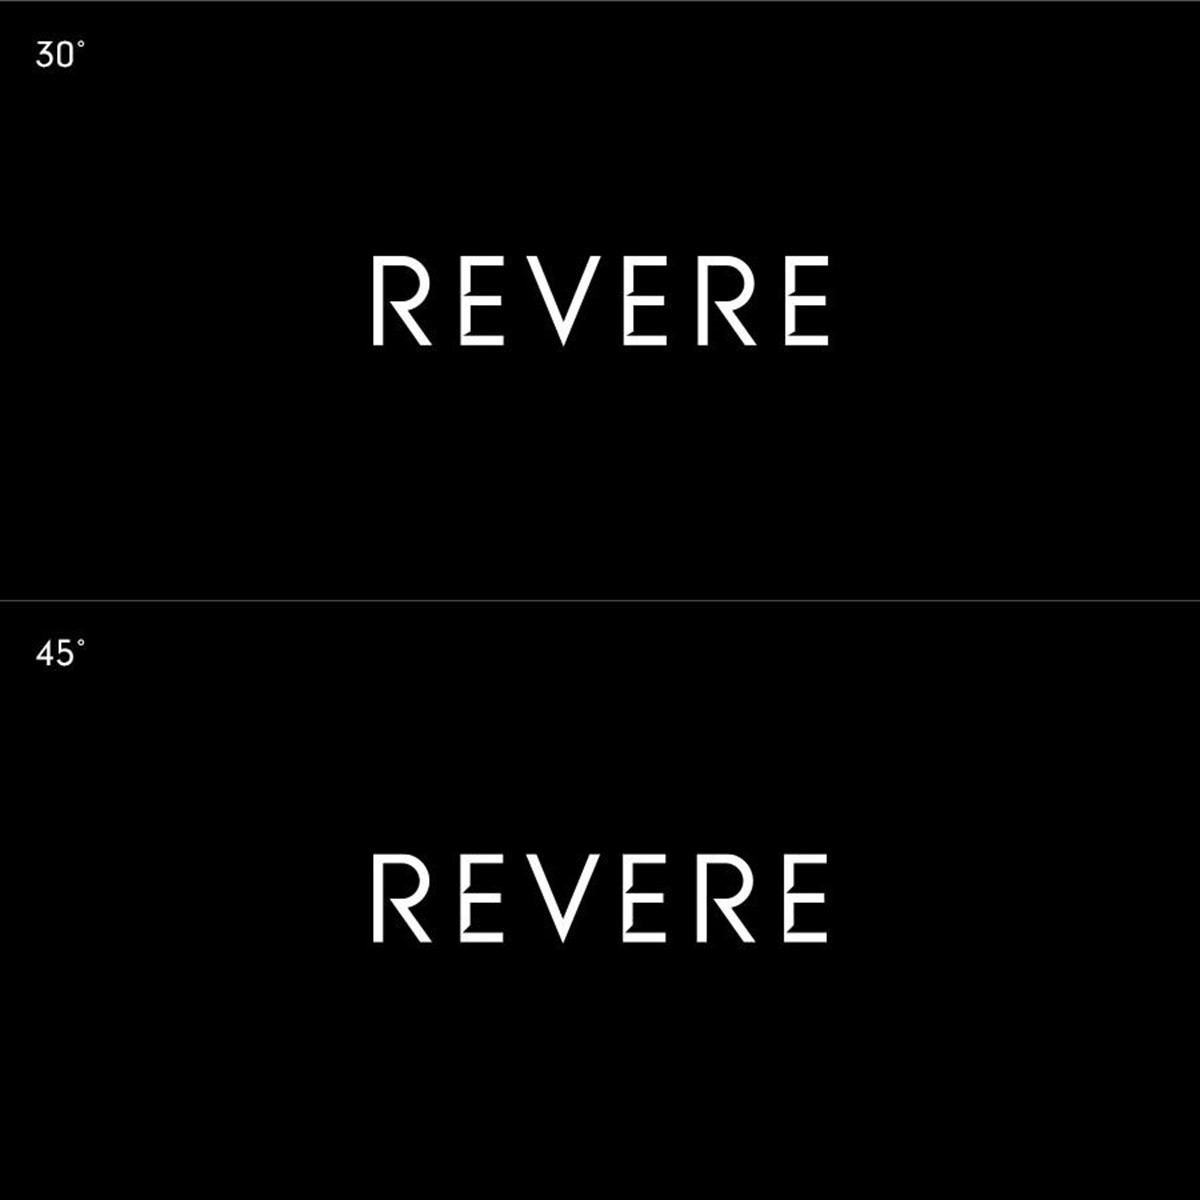 Revere. Light logotypes. Brand identity design by Superfried. Manchester.